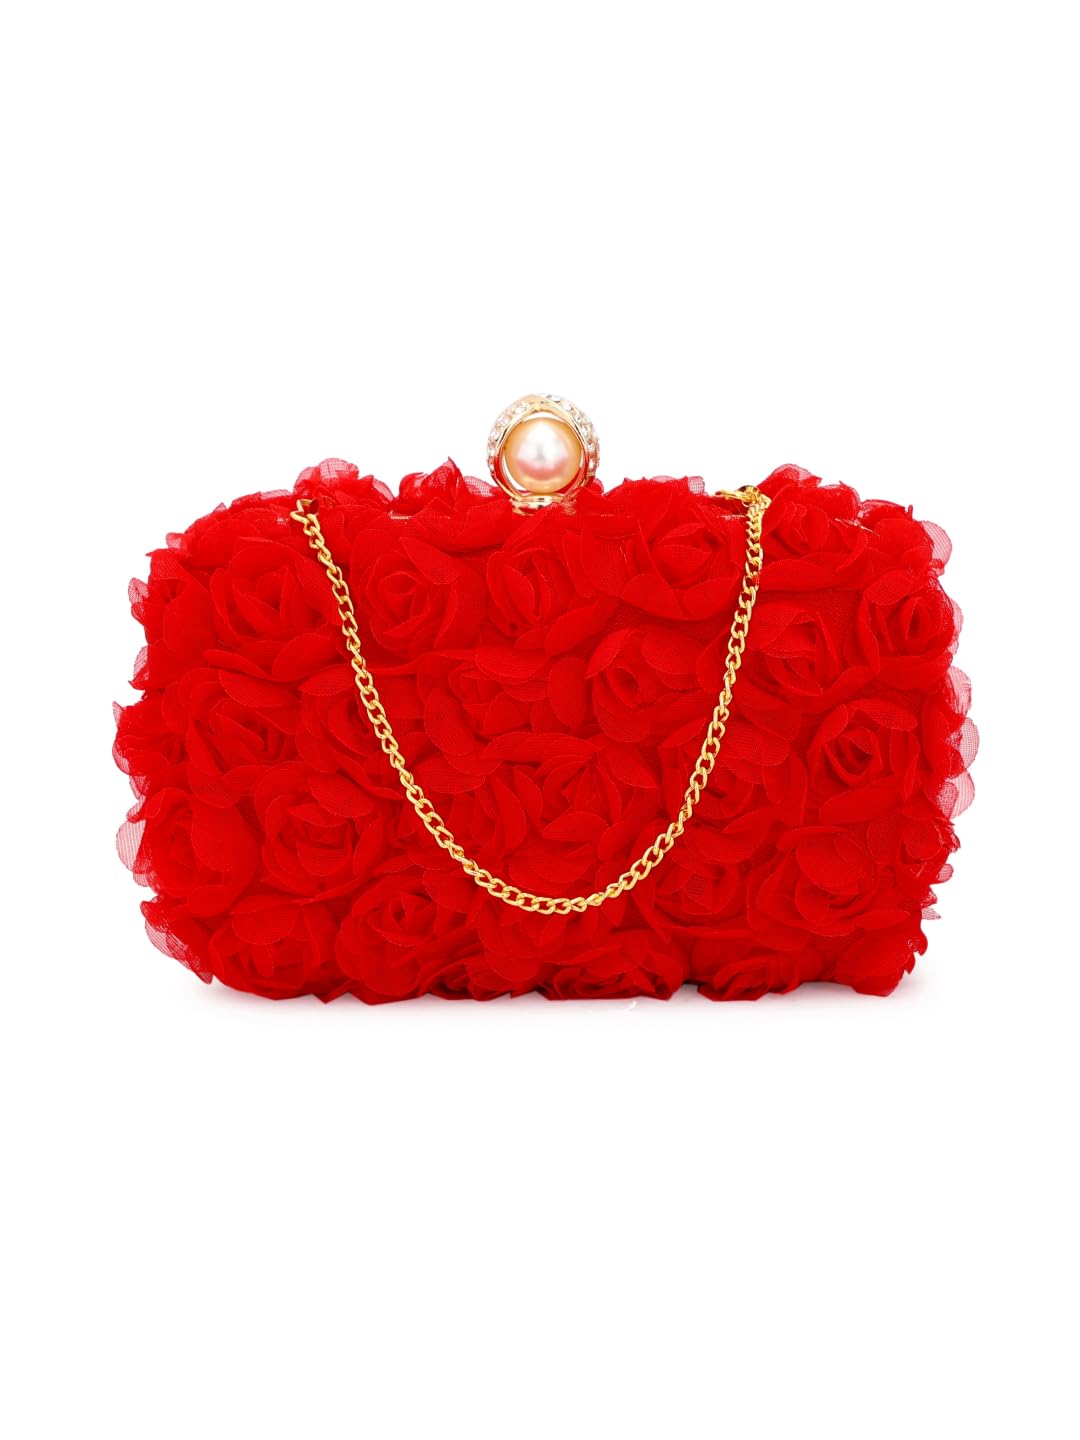 Red Evening Bag Beaded Purses | Clutch Bag Flowers Beads | Handbag Womens  Red Wedding - Shoulder Bags - Aliexpress